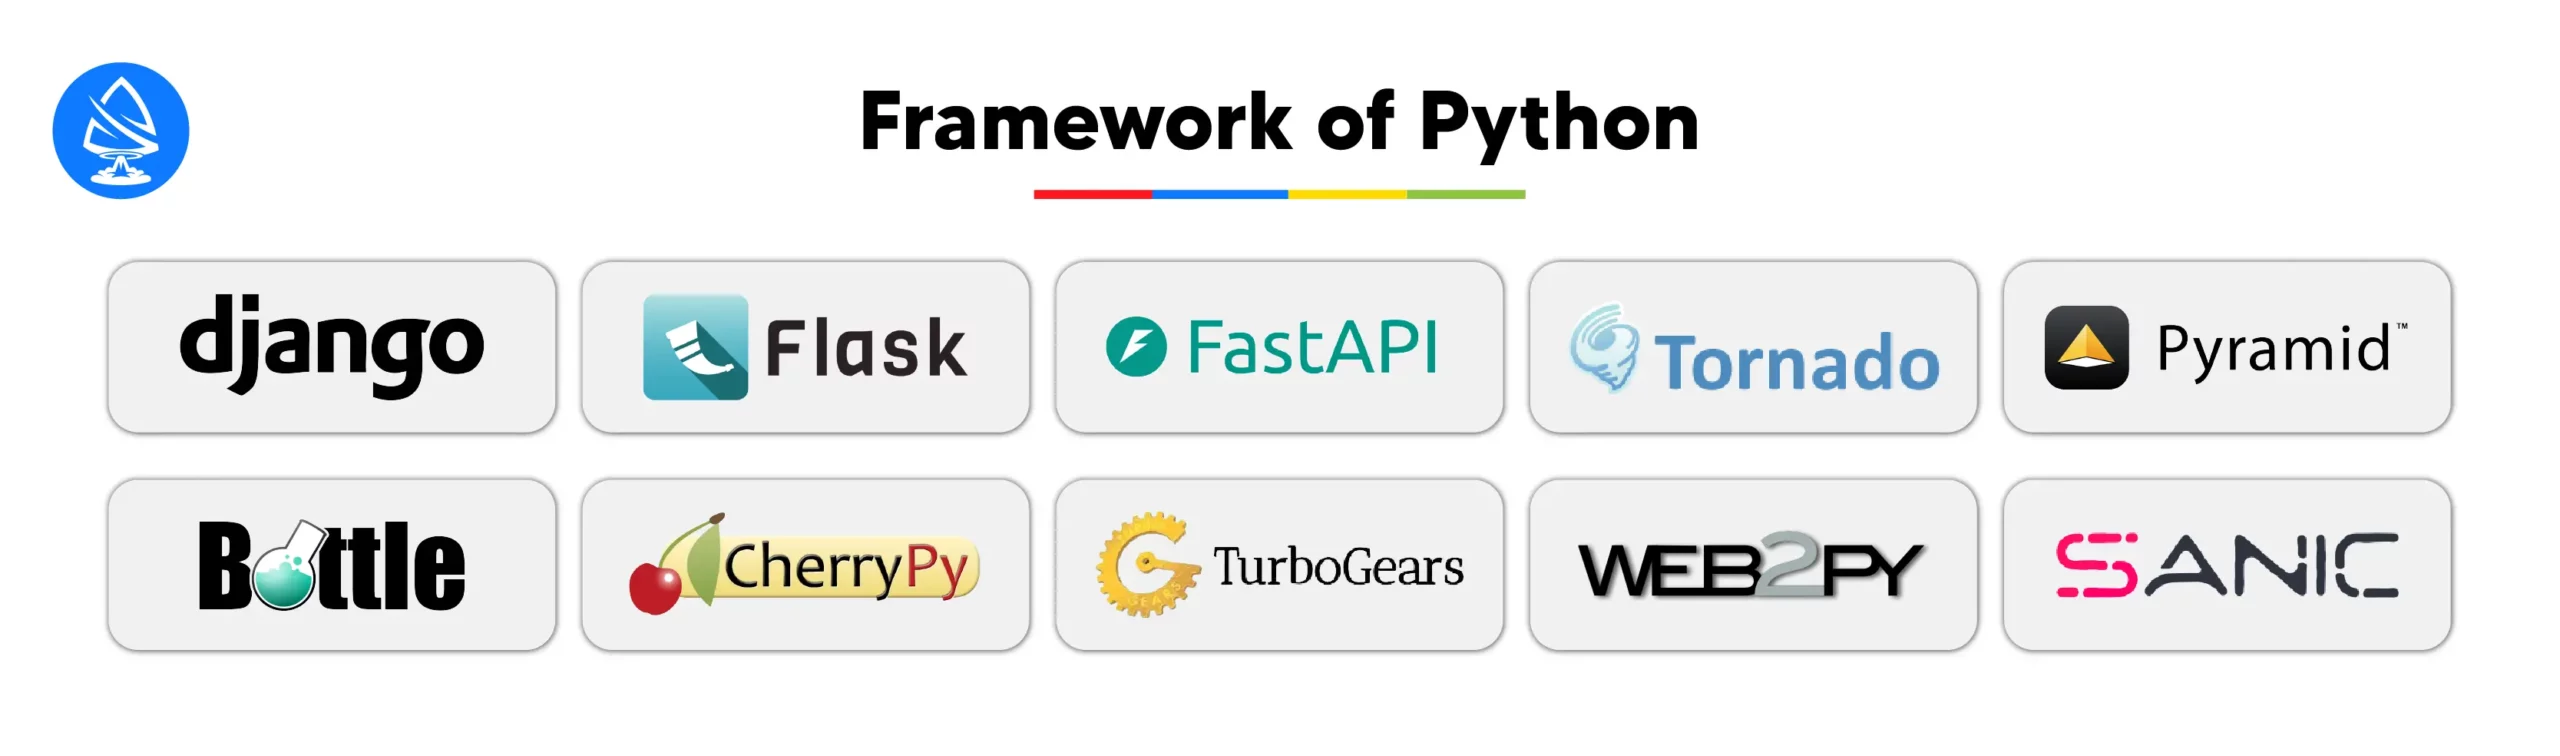 nodejs alternative: Framework of Python